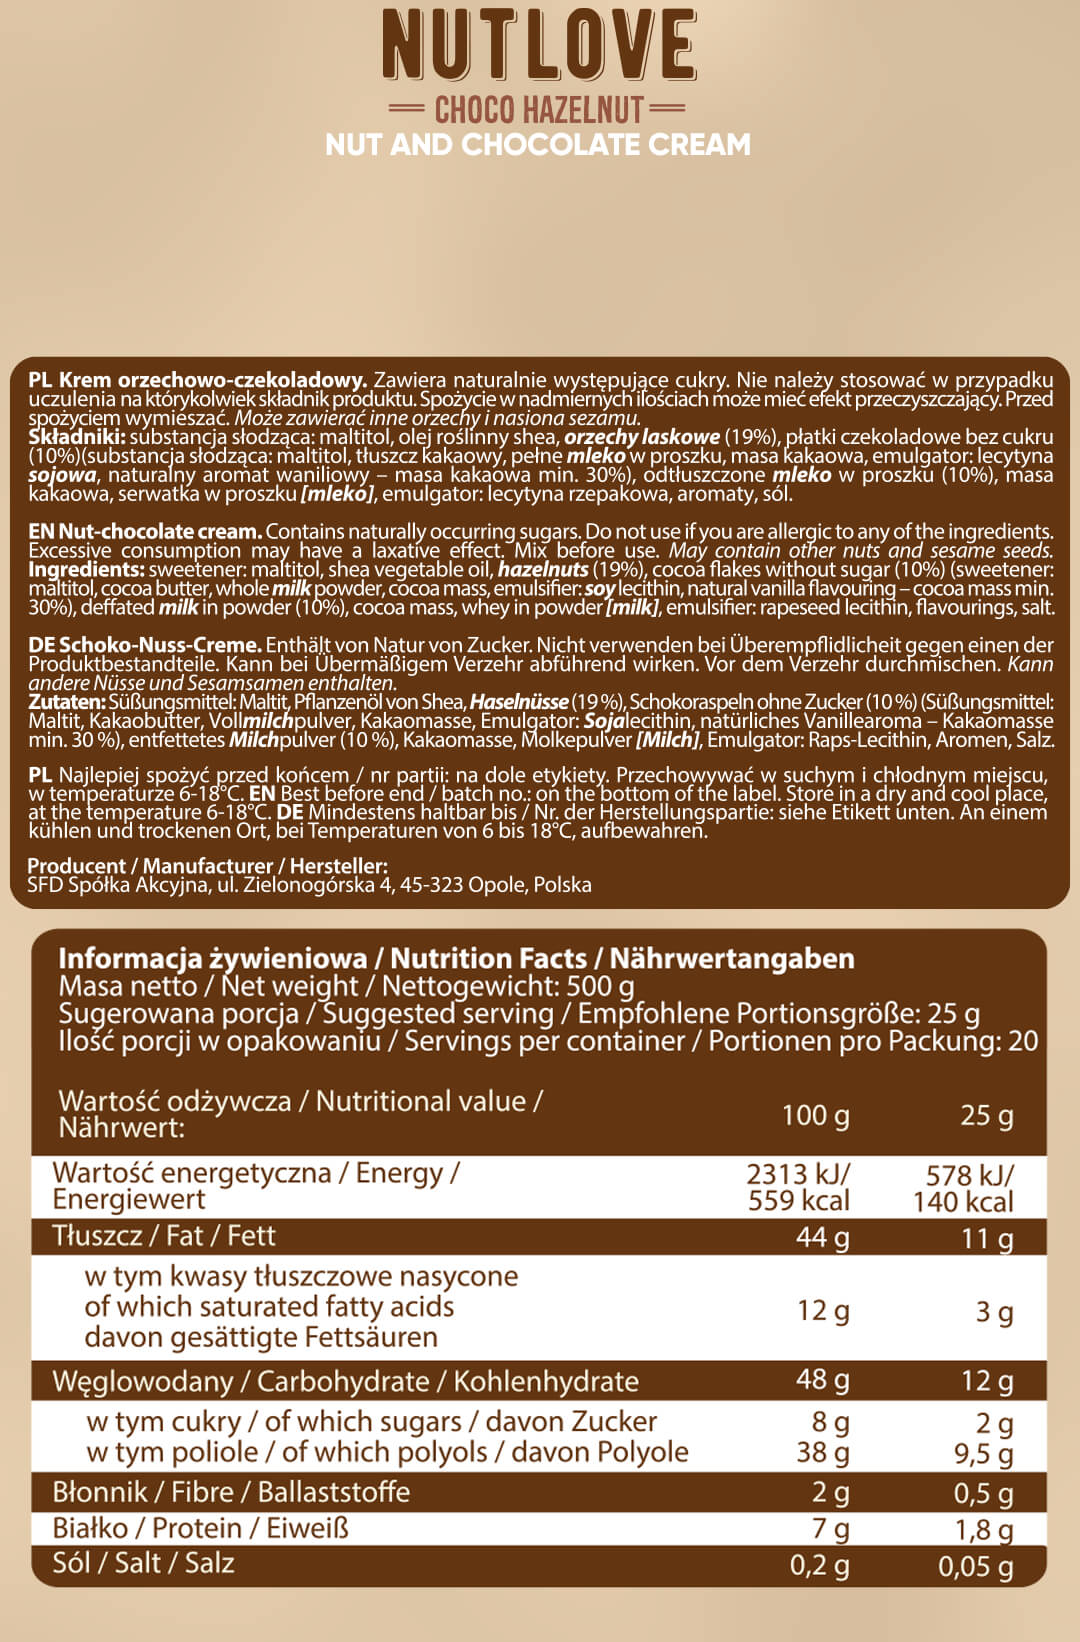 nutlove-nut-love-choco-hazelnut-ingredients